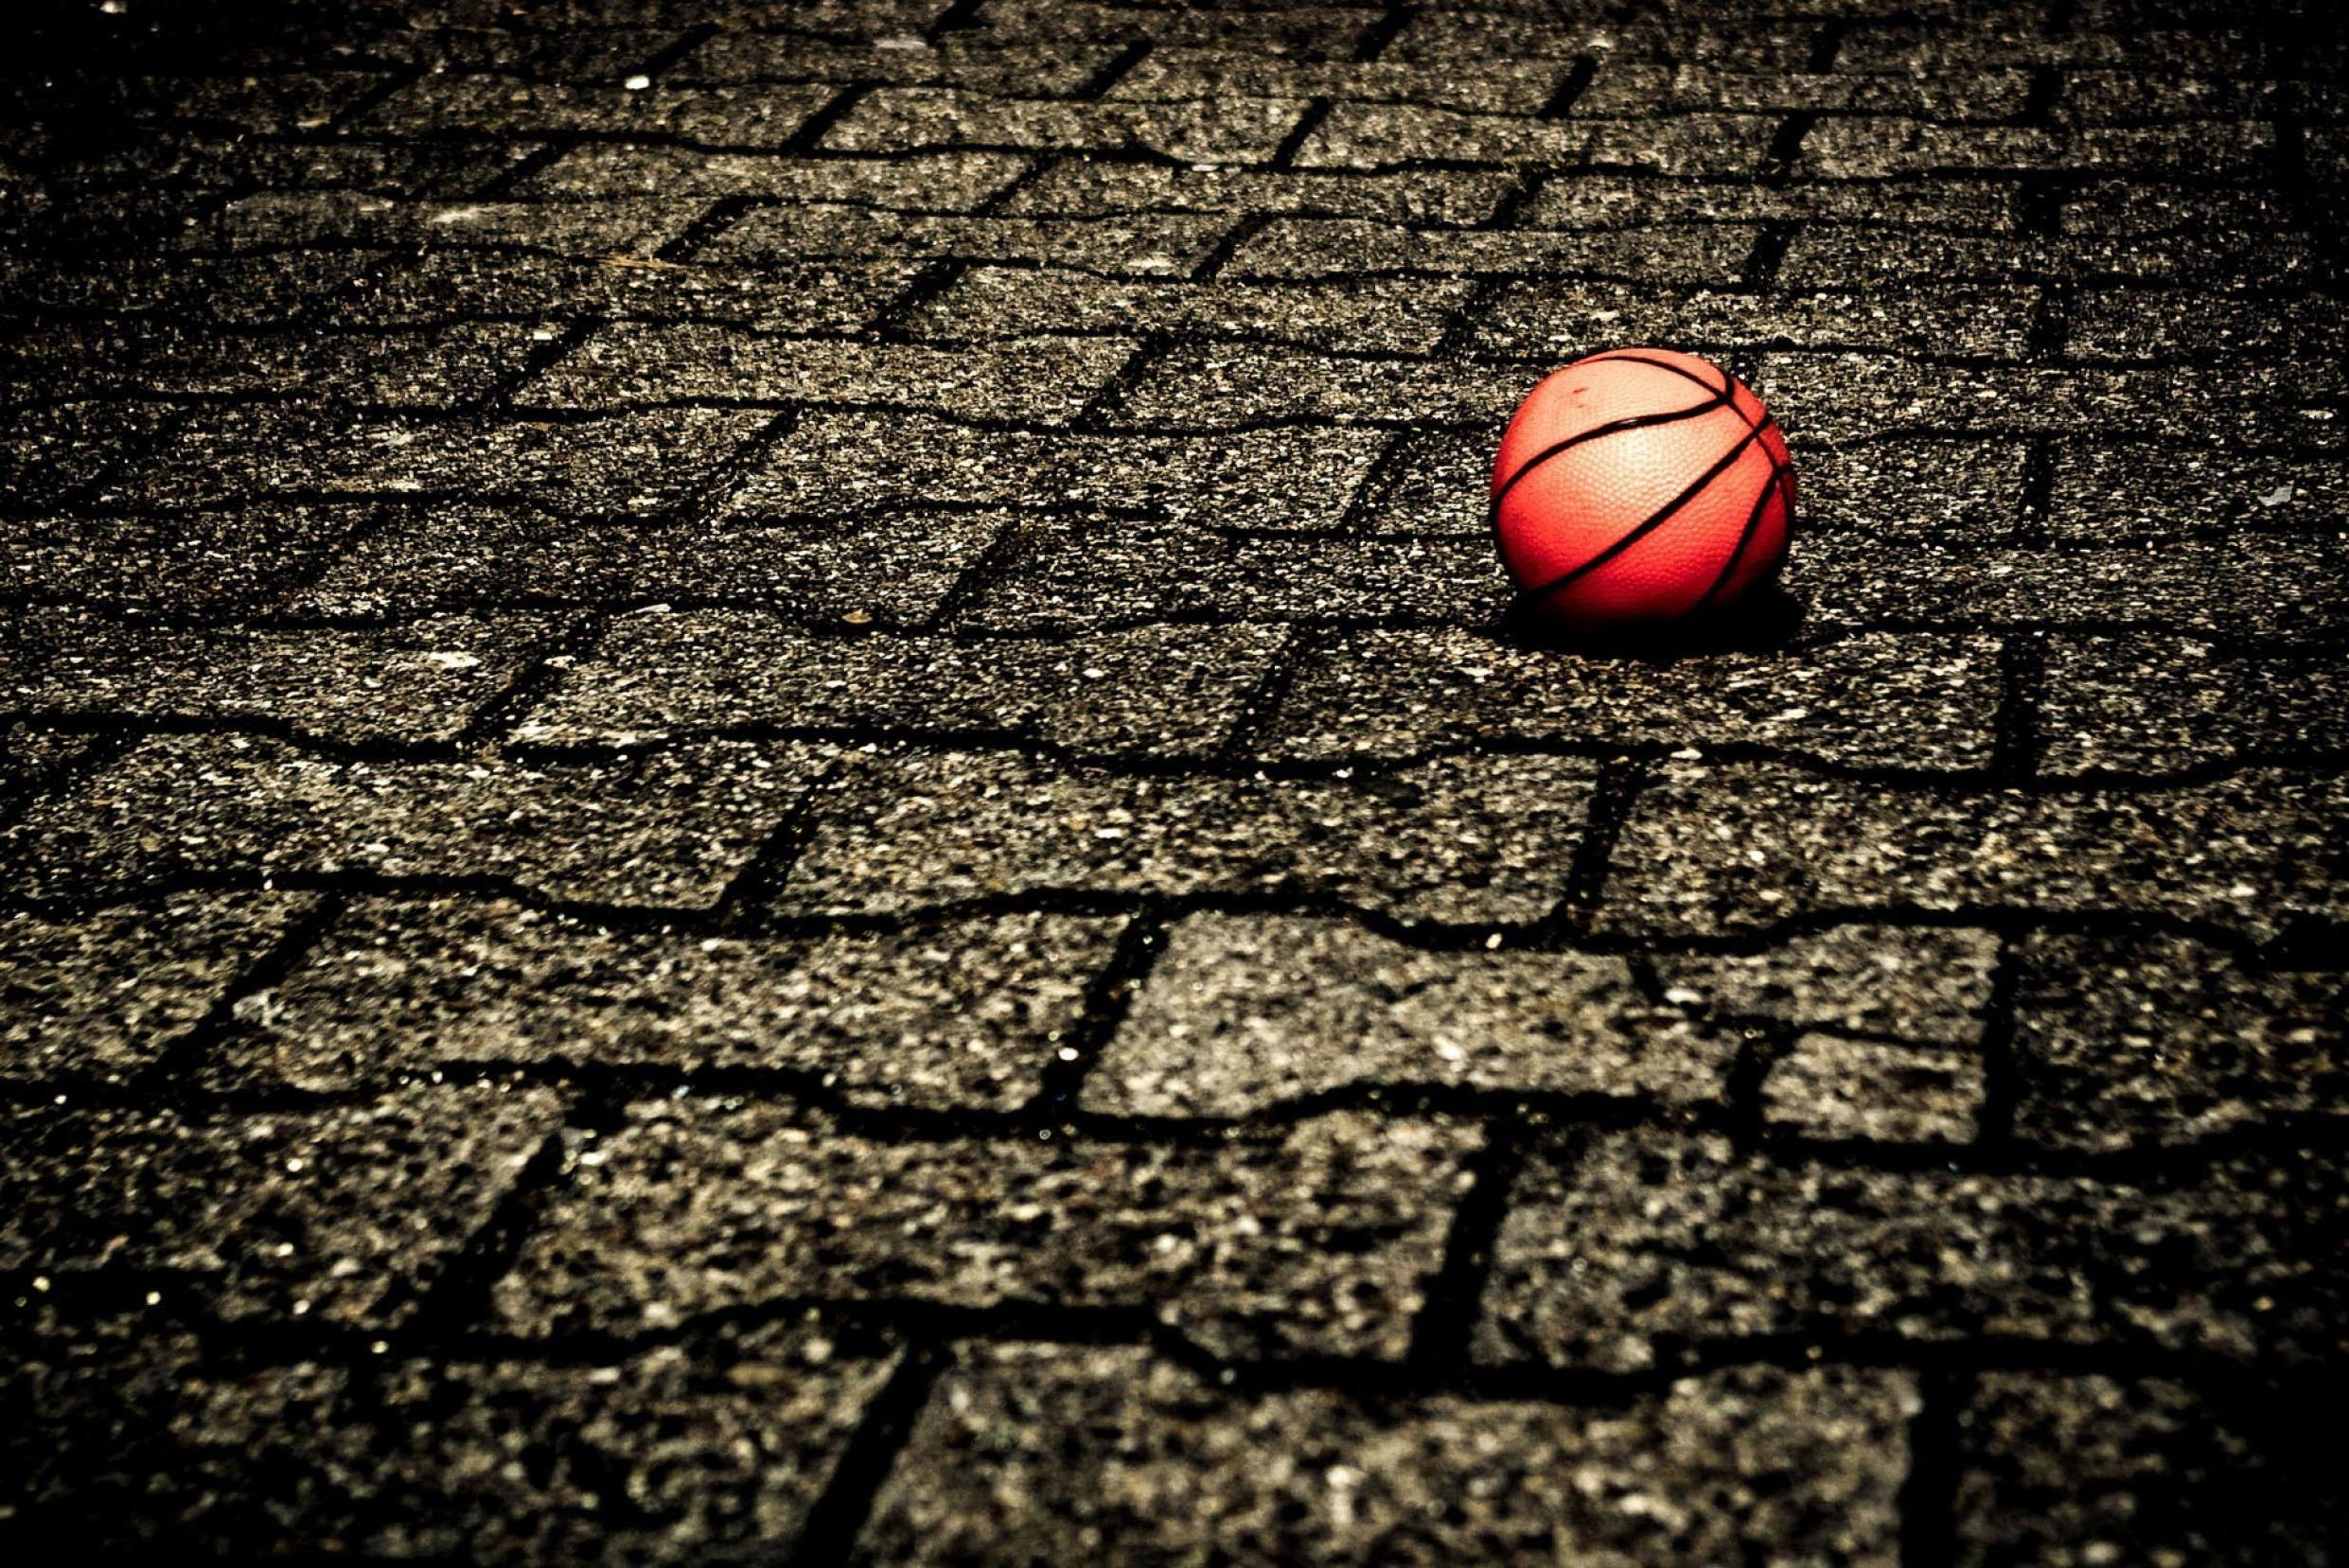 2482x1657 Hd Basket Ball Image